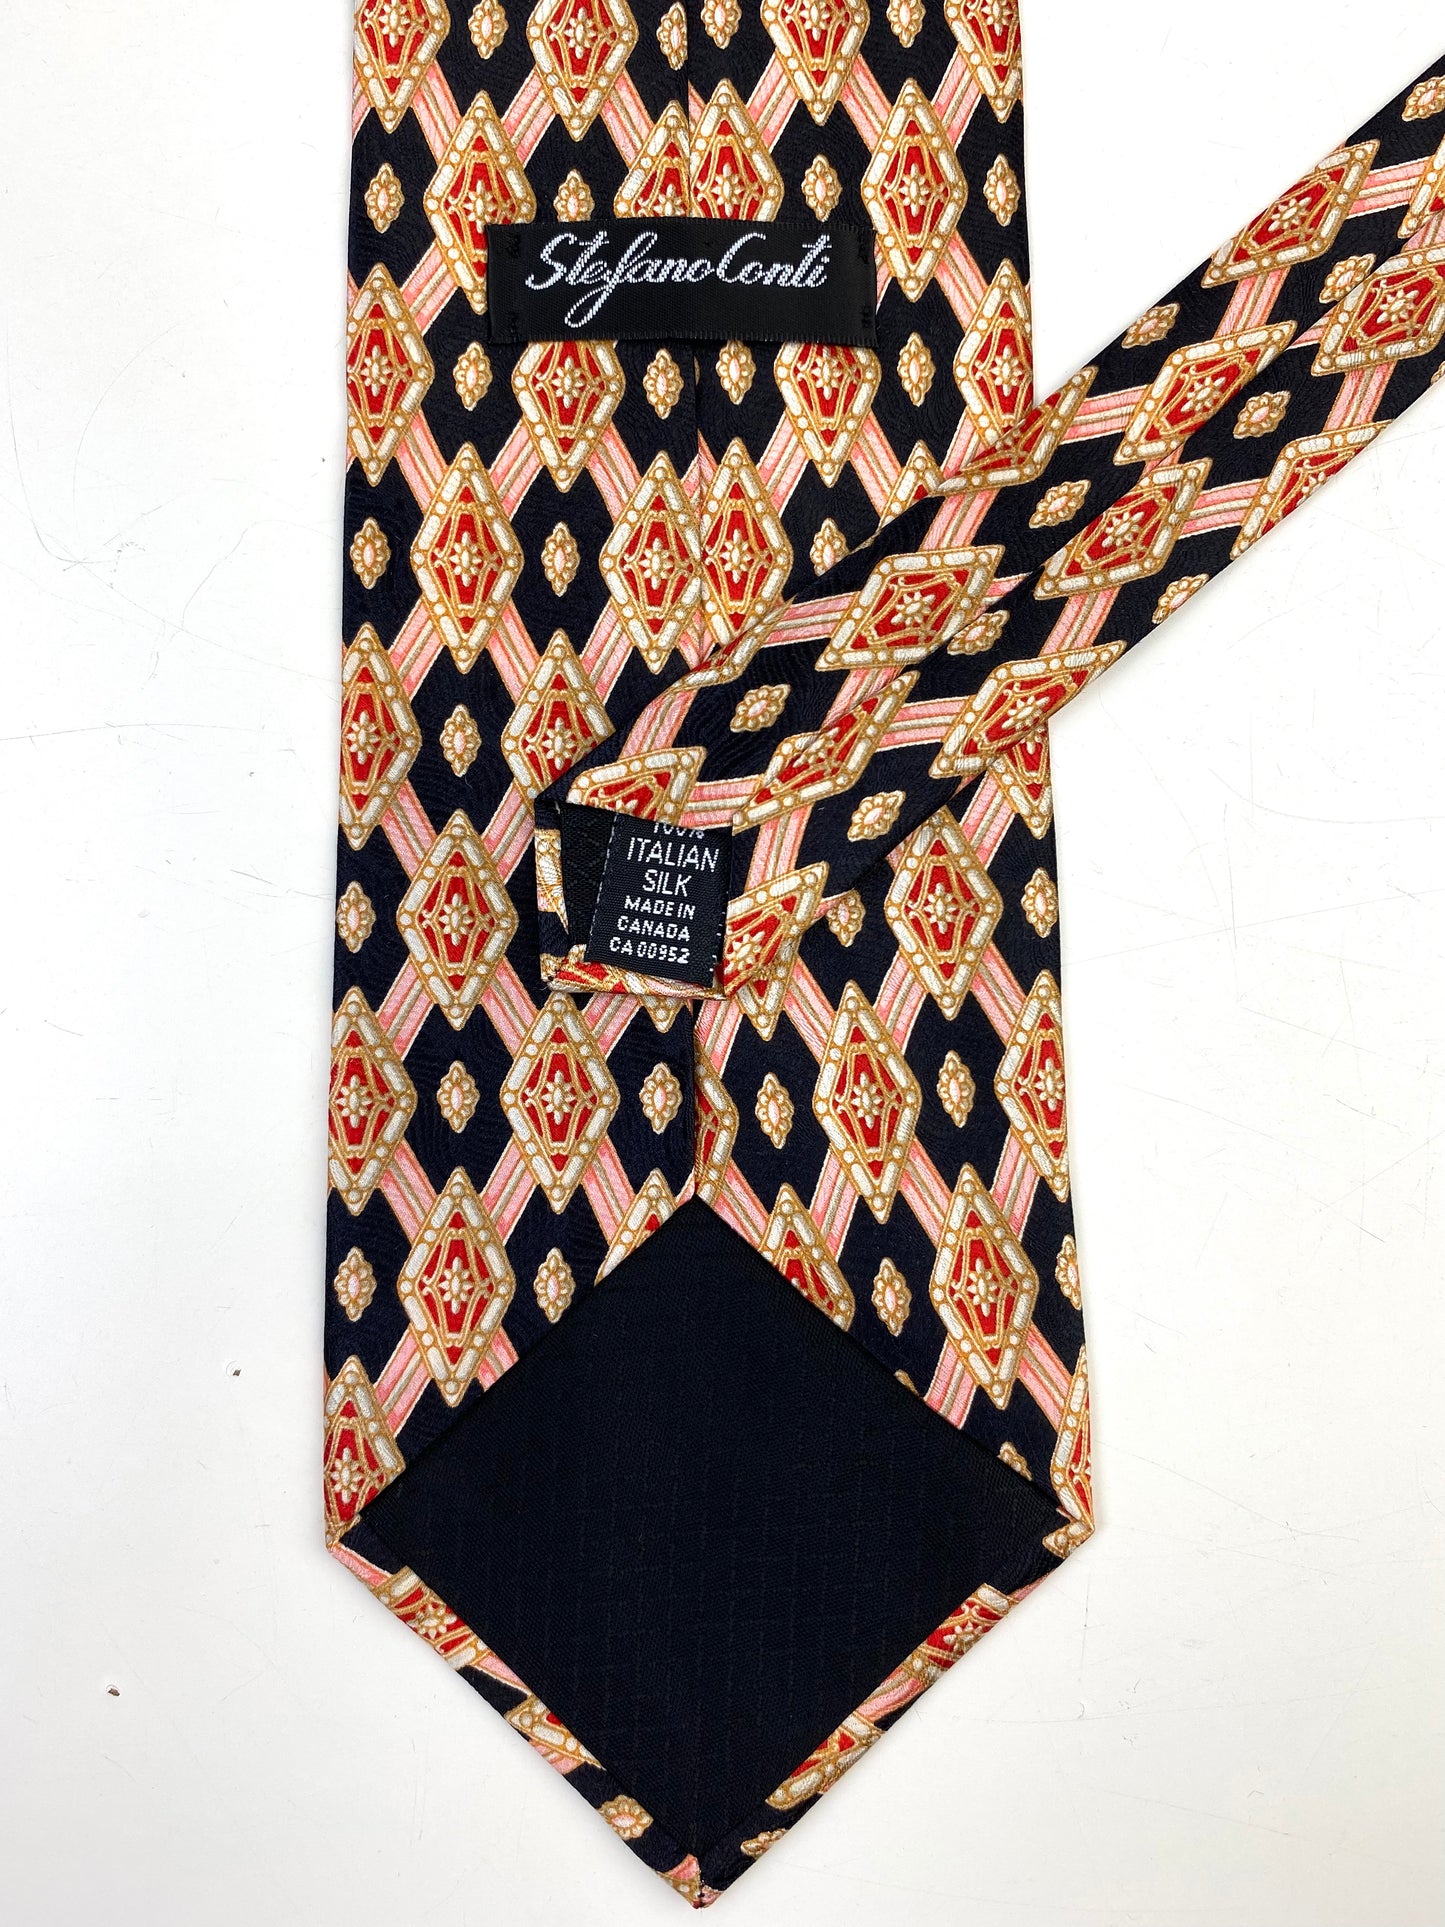 90s Deadstock Silk Necktie, Men's Vintage Black/ Pink Geometric Lattice Diamond Pattern Tie, NOS